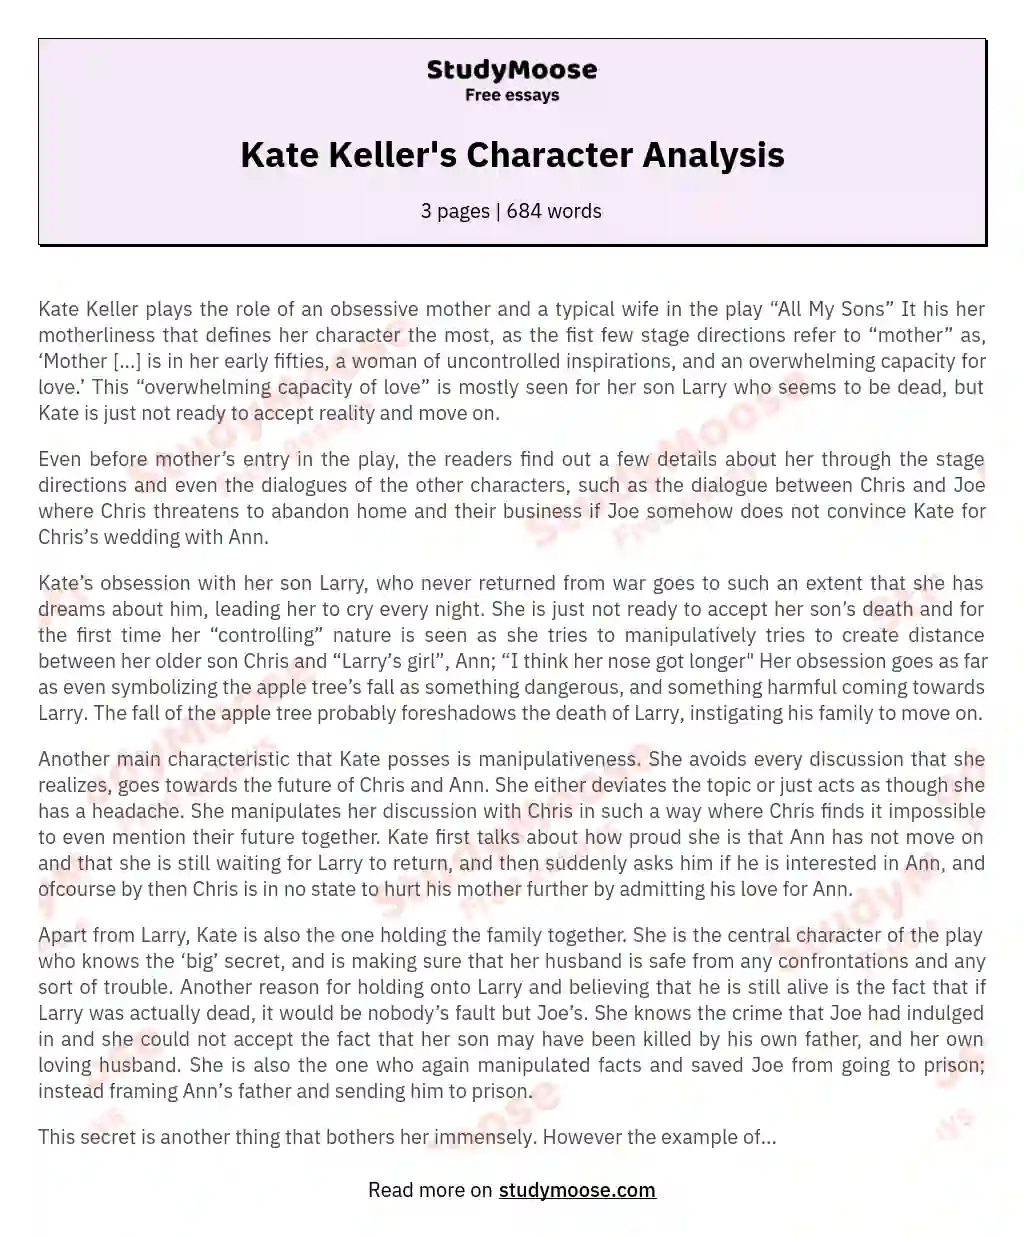 Kate Keller's Character Analysis essay